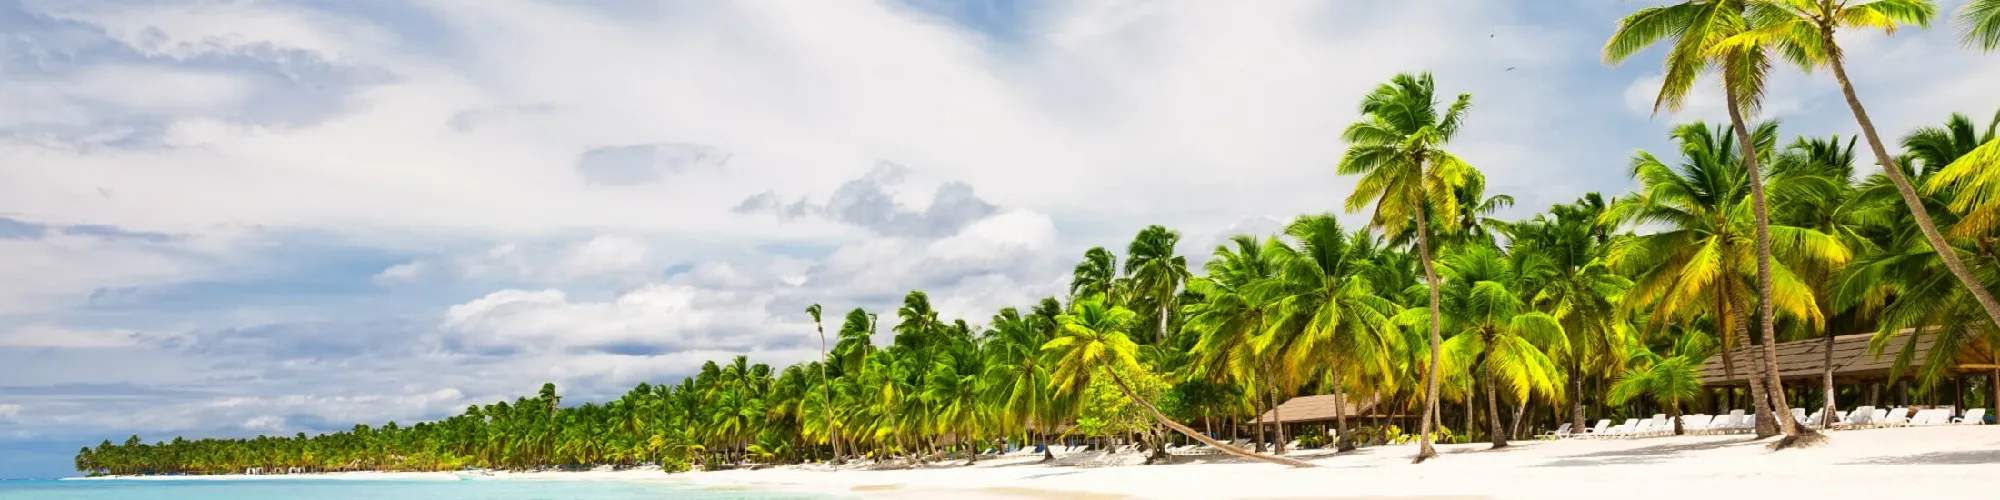 Traumreisen in die Karibik background image